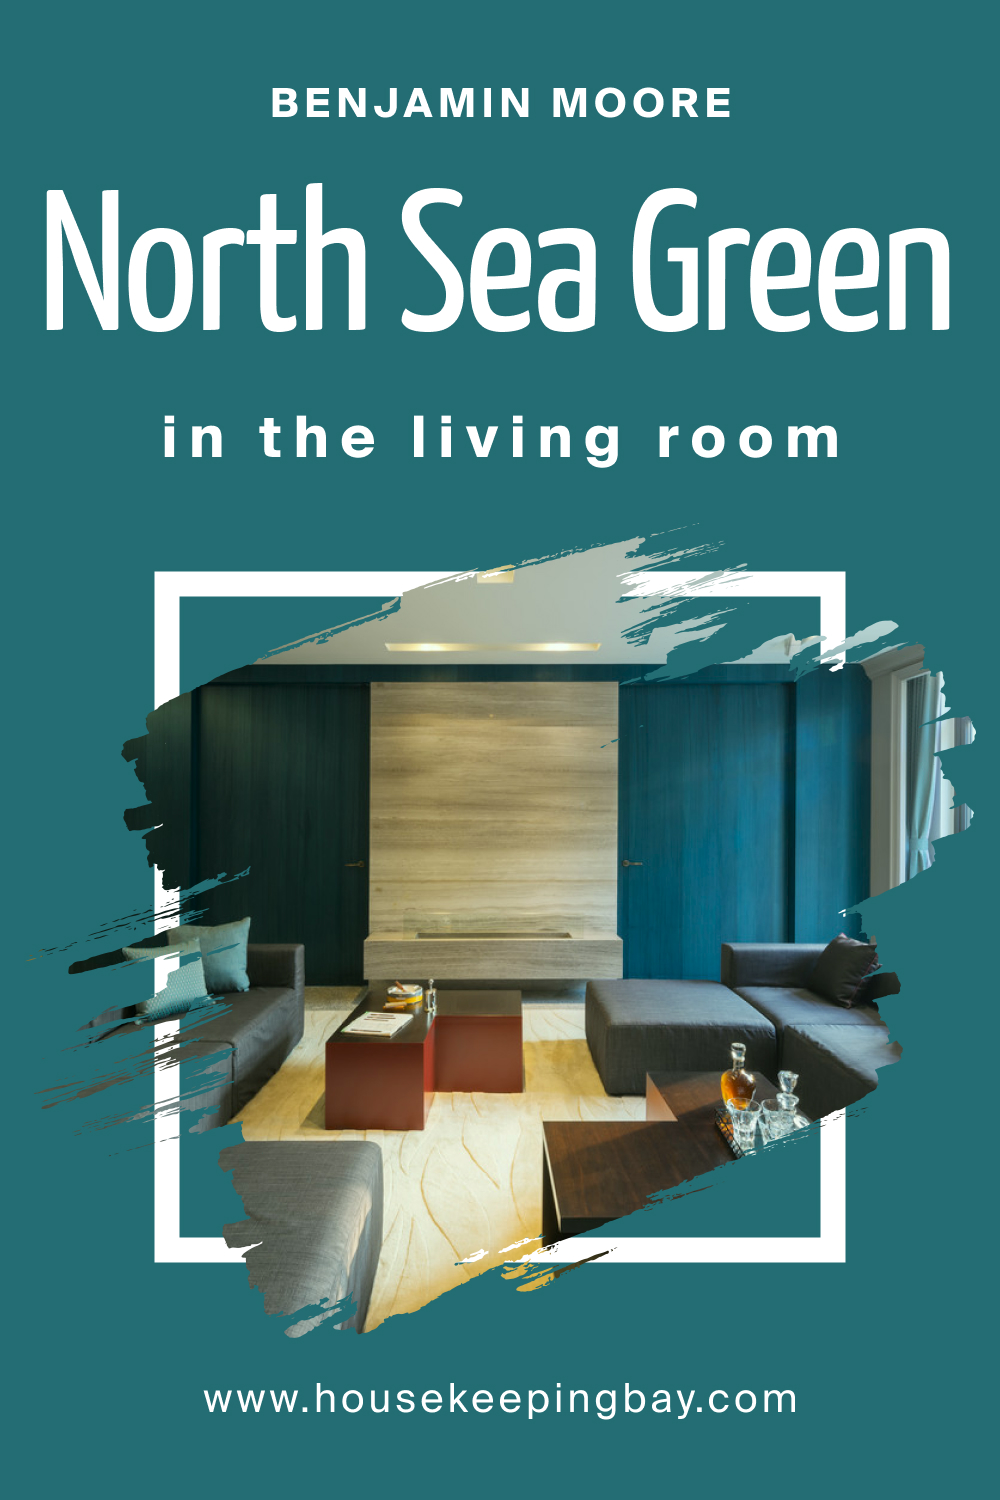 Benjamin Moore. North Sea Green 2053 30 in the Living Room